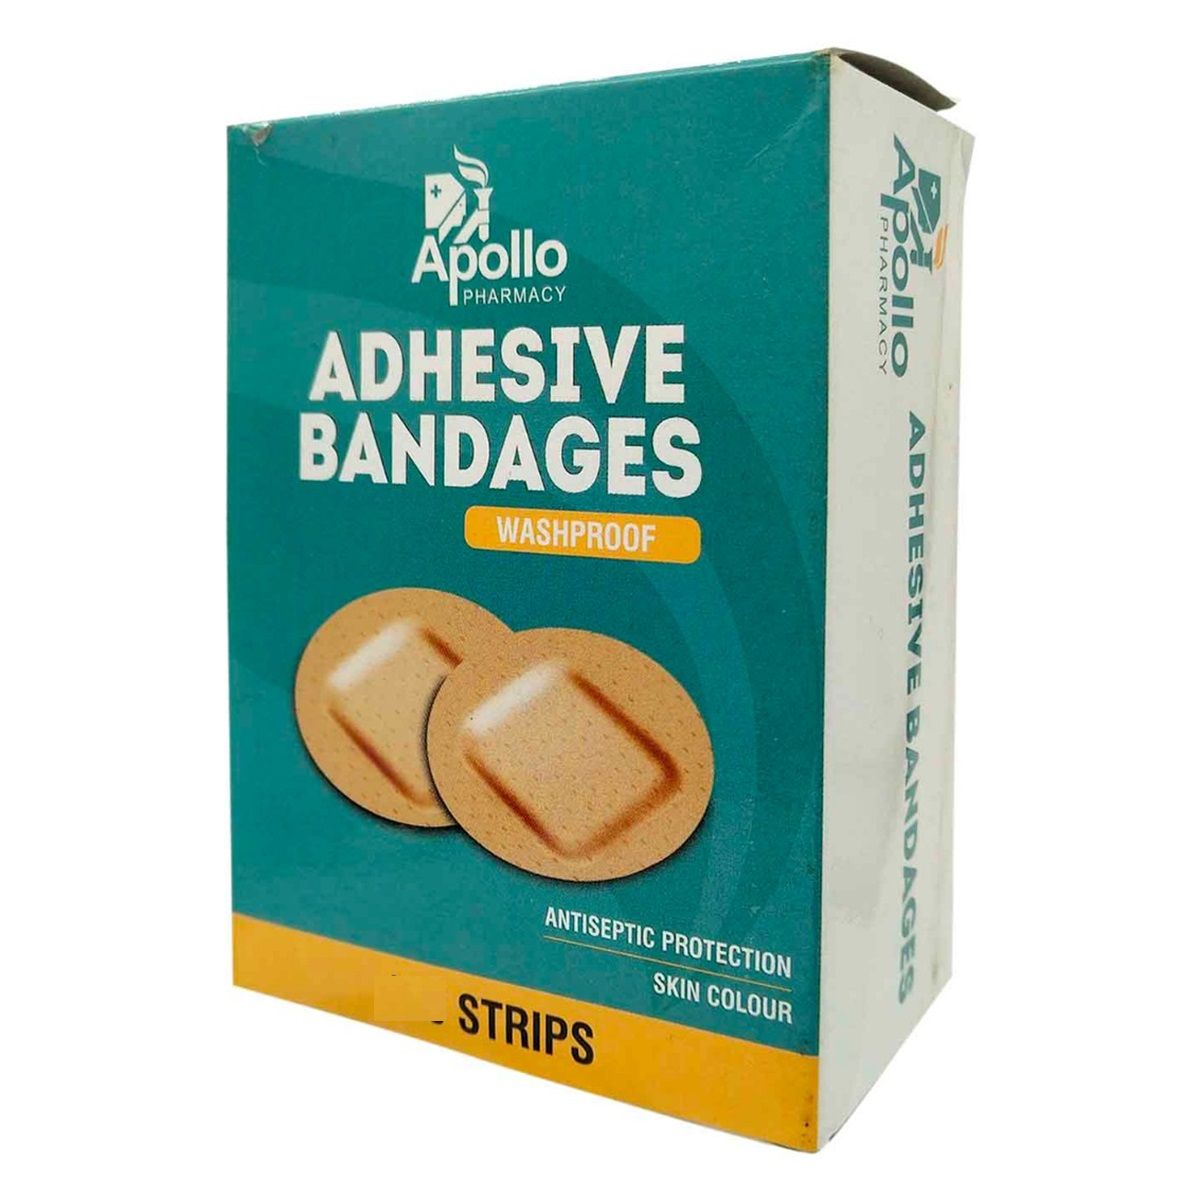 Apollo Pharmacy Adhesive Round Bandage Wash Proof, 1 Count Price